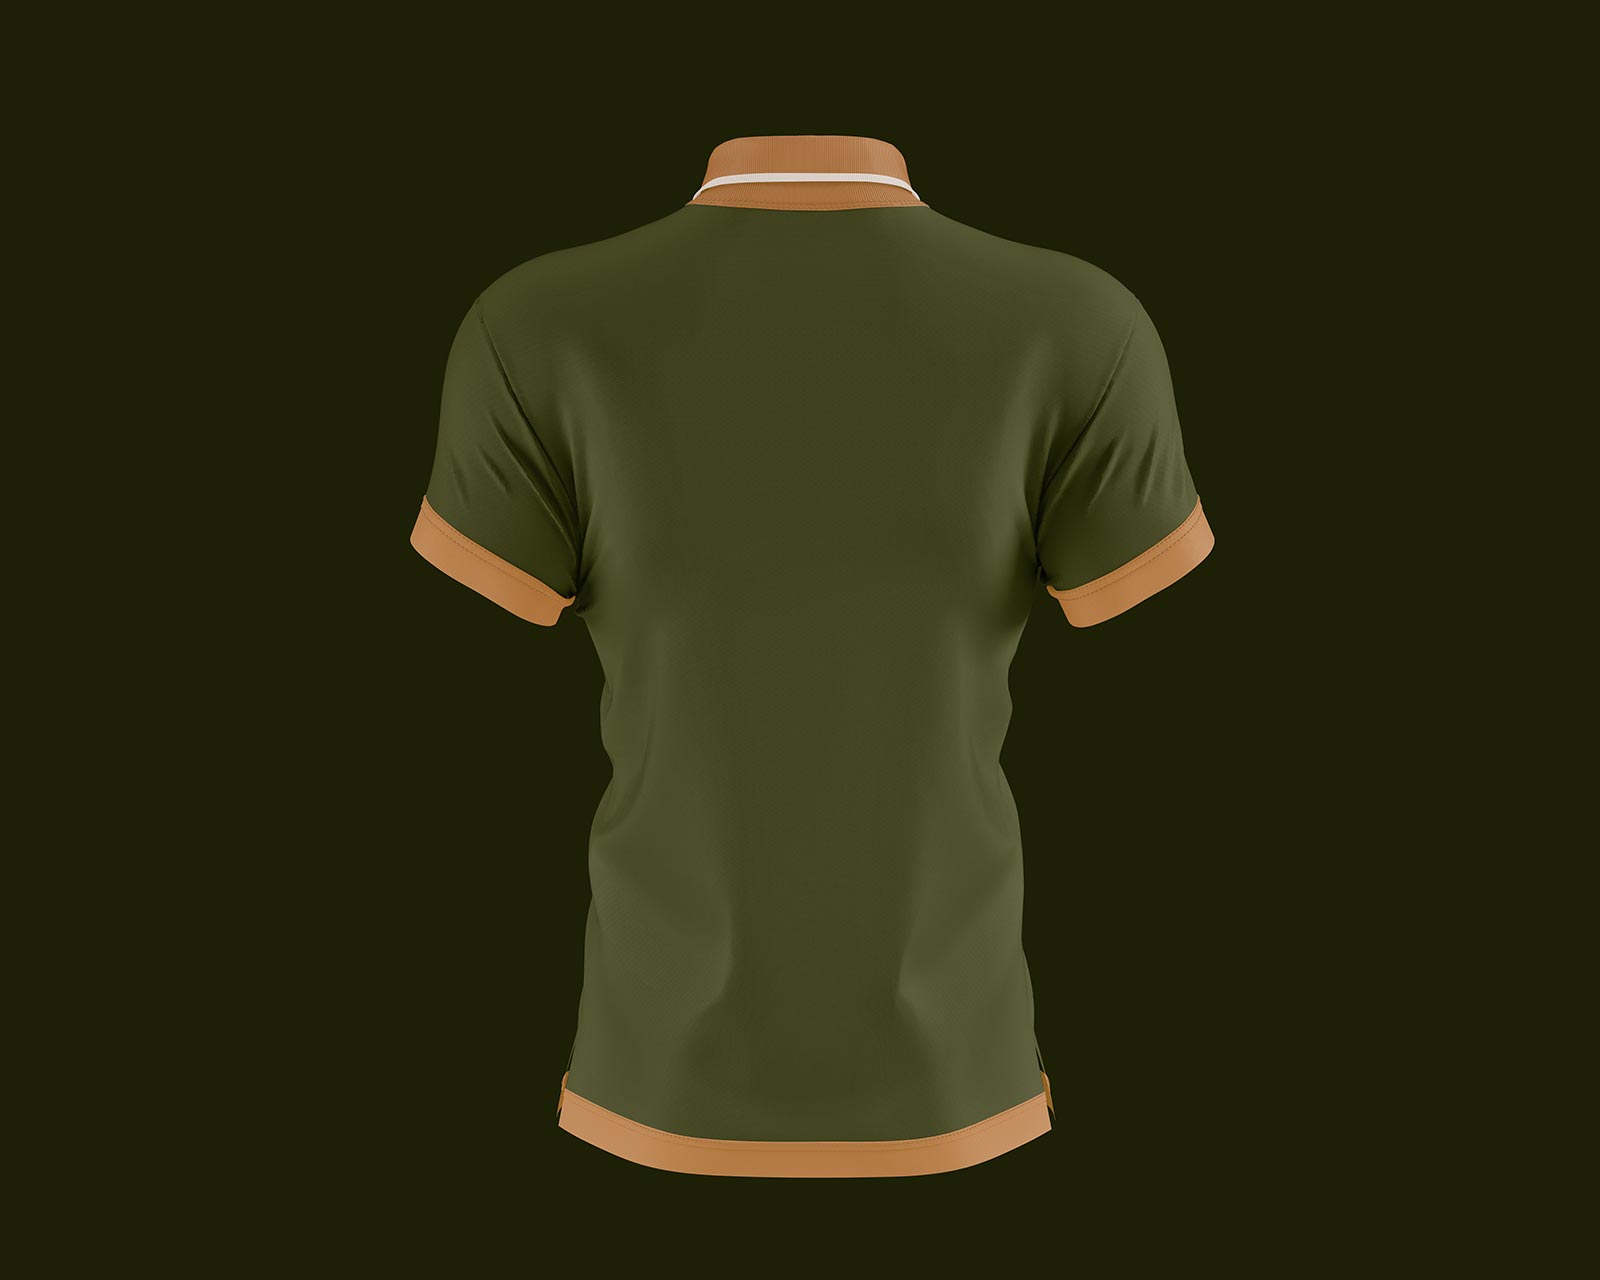 Free Polo Short Sleeves T-Shirt Mockup PSD Set